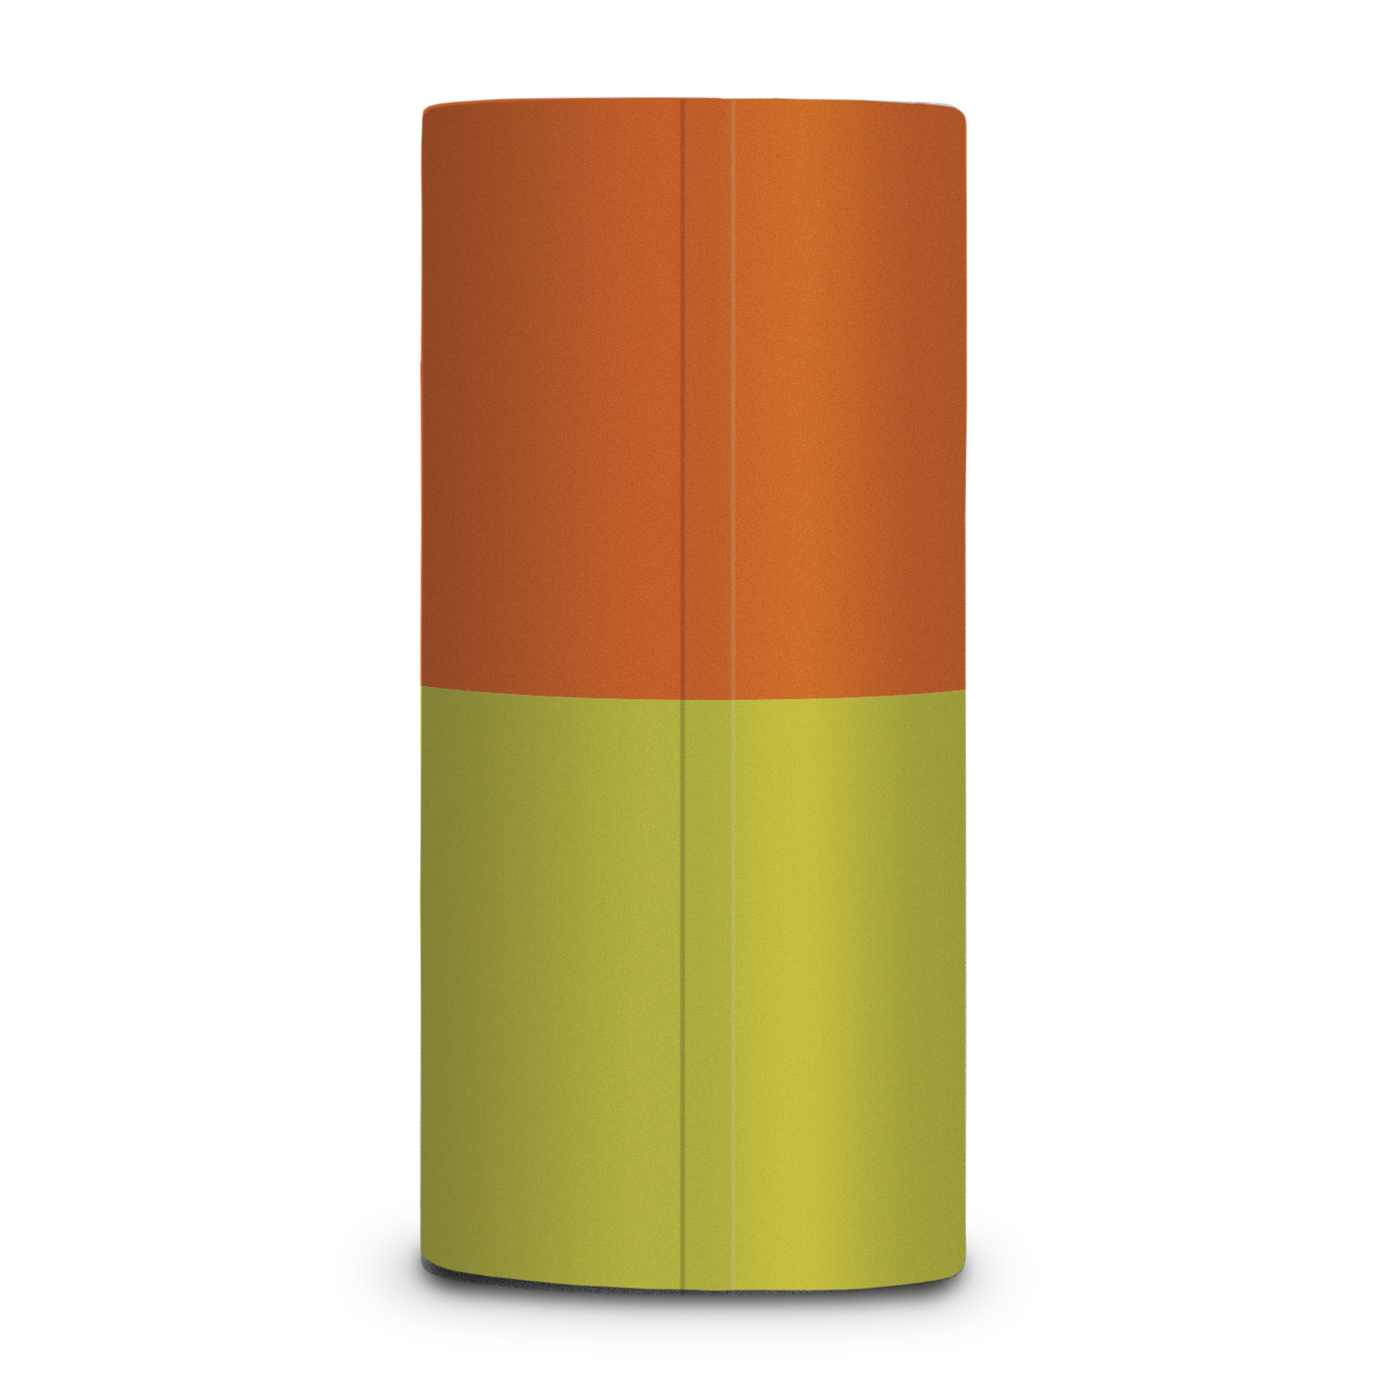 Orange and Neon Dual Color Thumb Slug